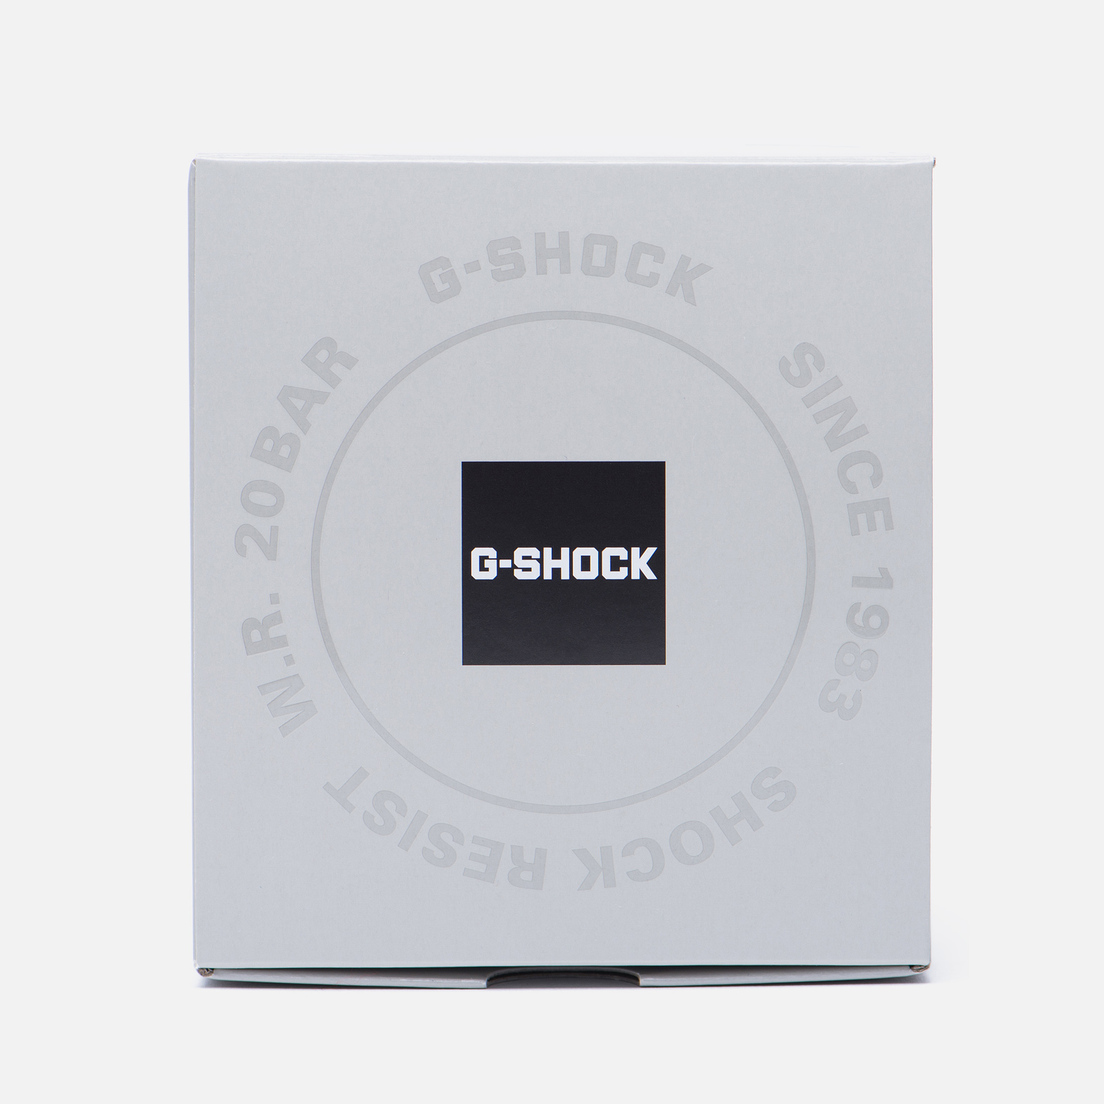 CASIO Наручные часы G-SHOCK GMA-S110CM-7A1